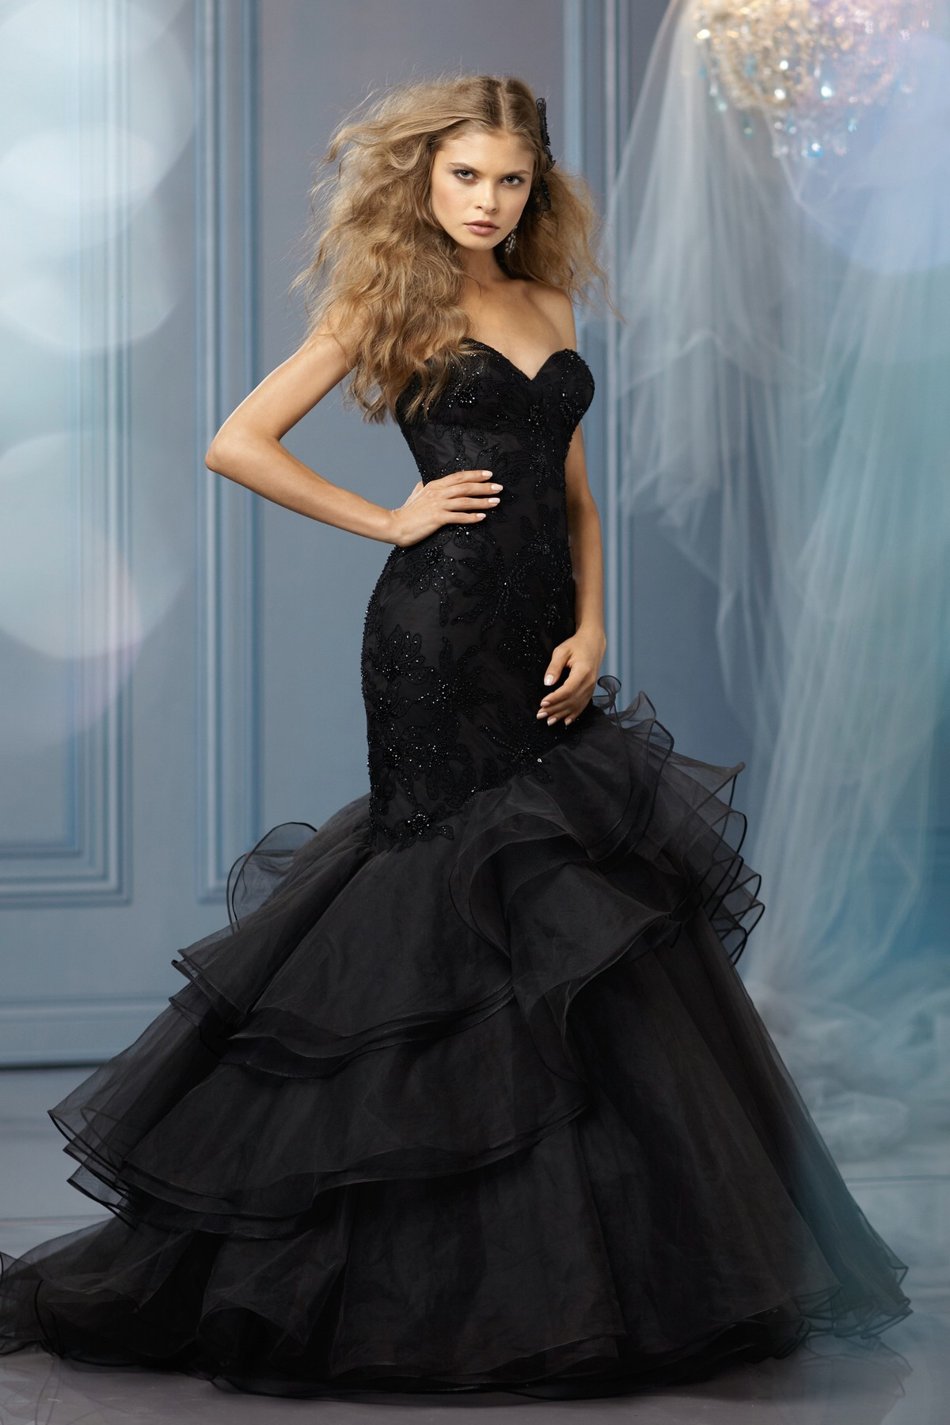 Would You Wear A Black Wedding Dress?